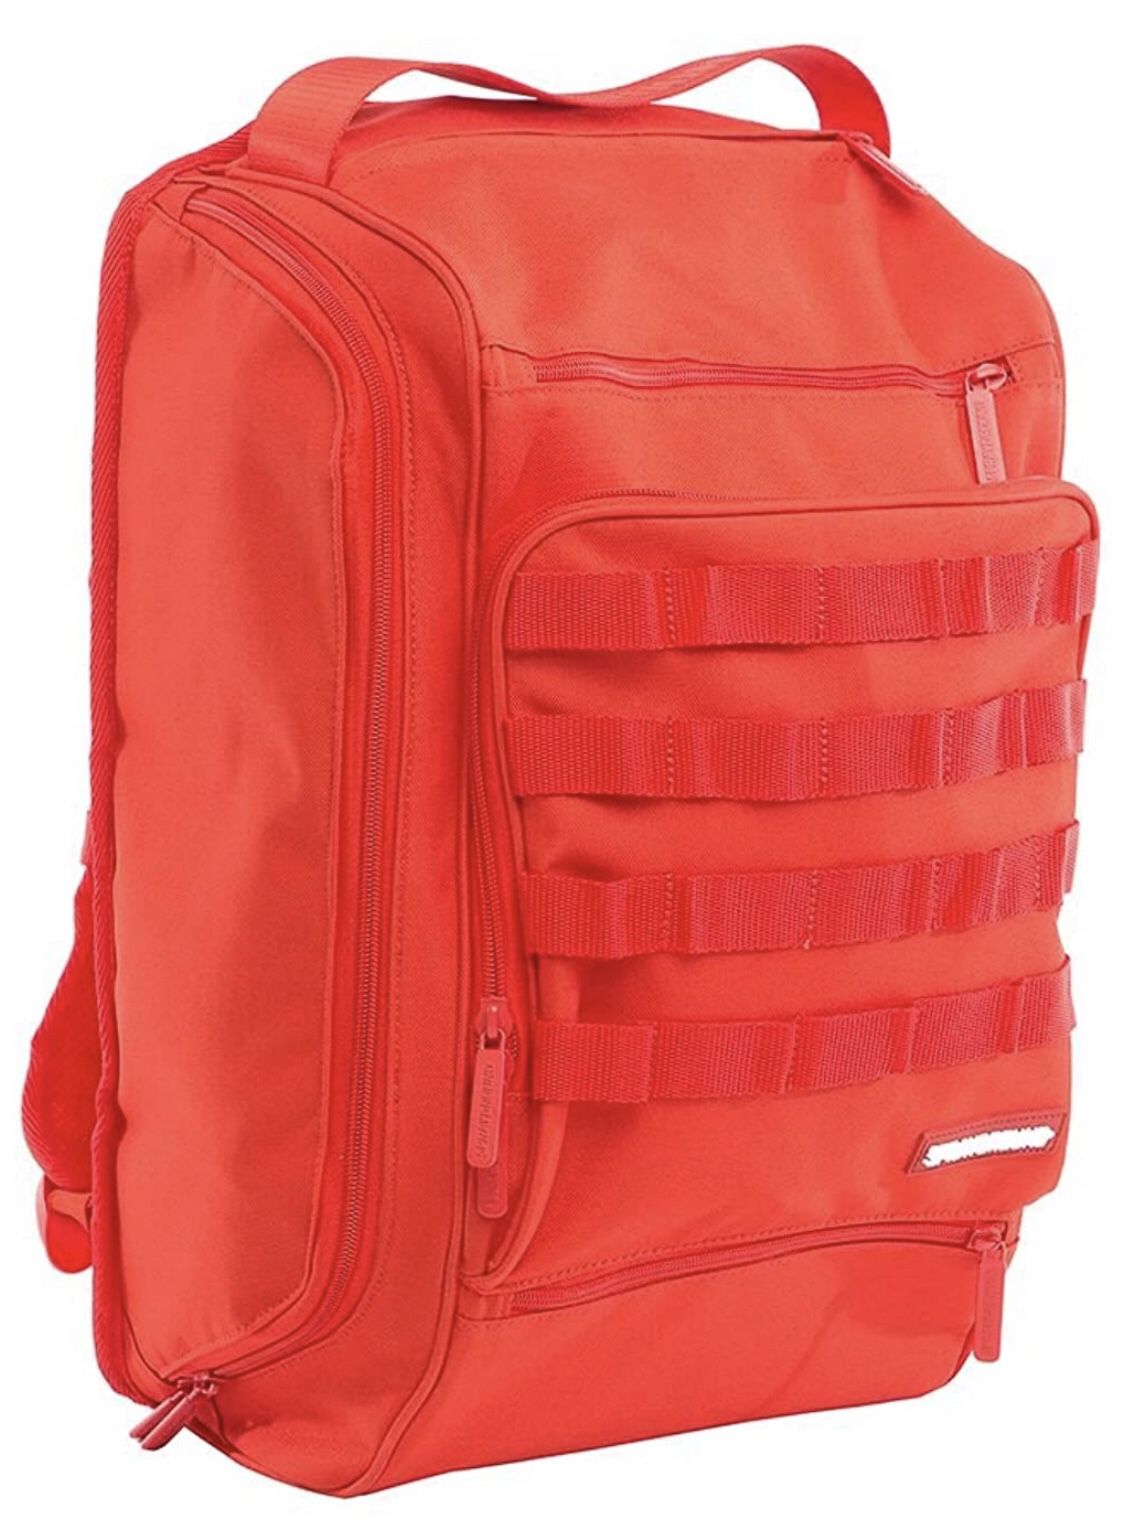 Sprayground designer guns backpack for Sale in Riverside, CA - OfferUp